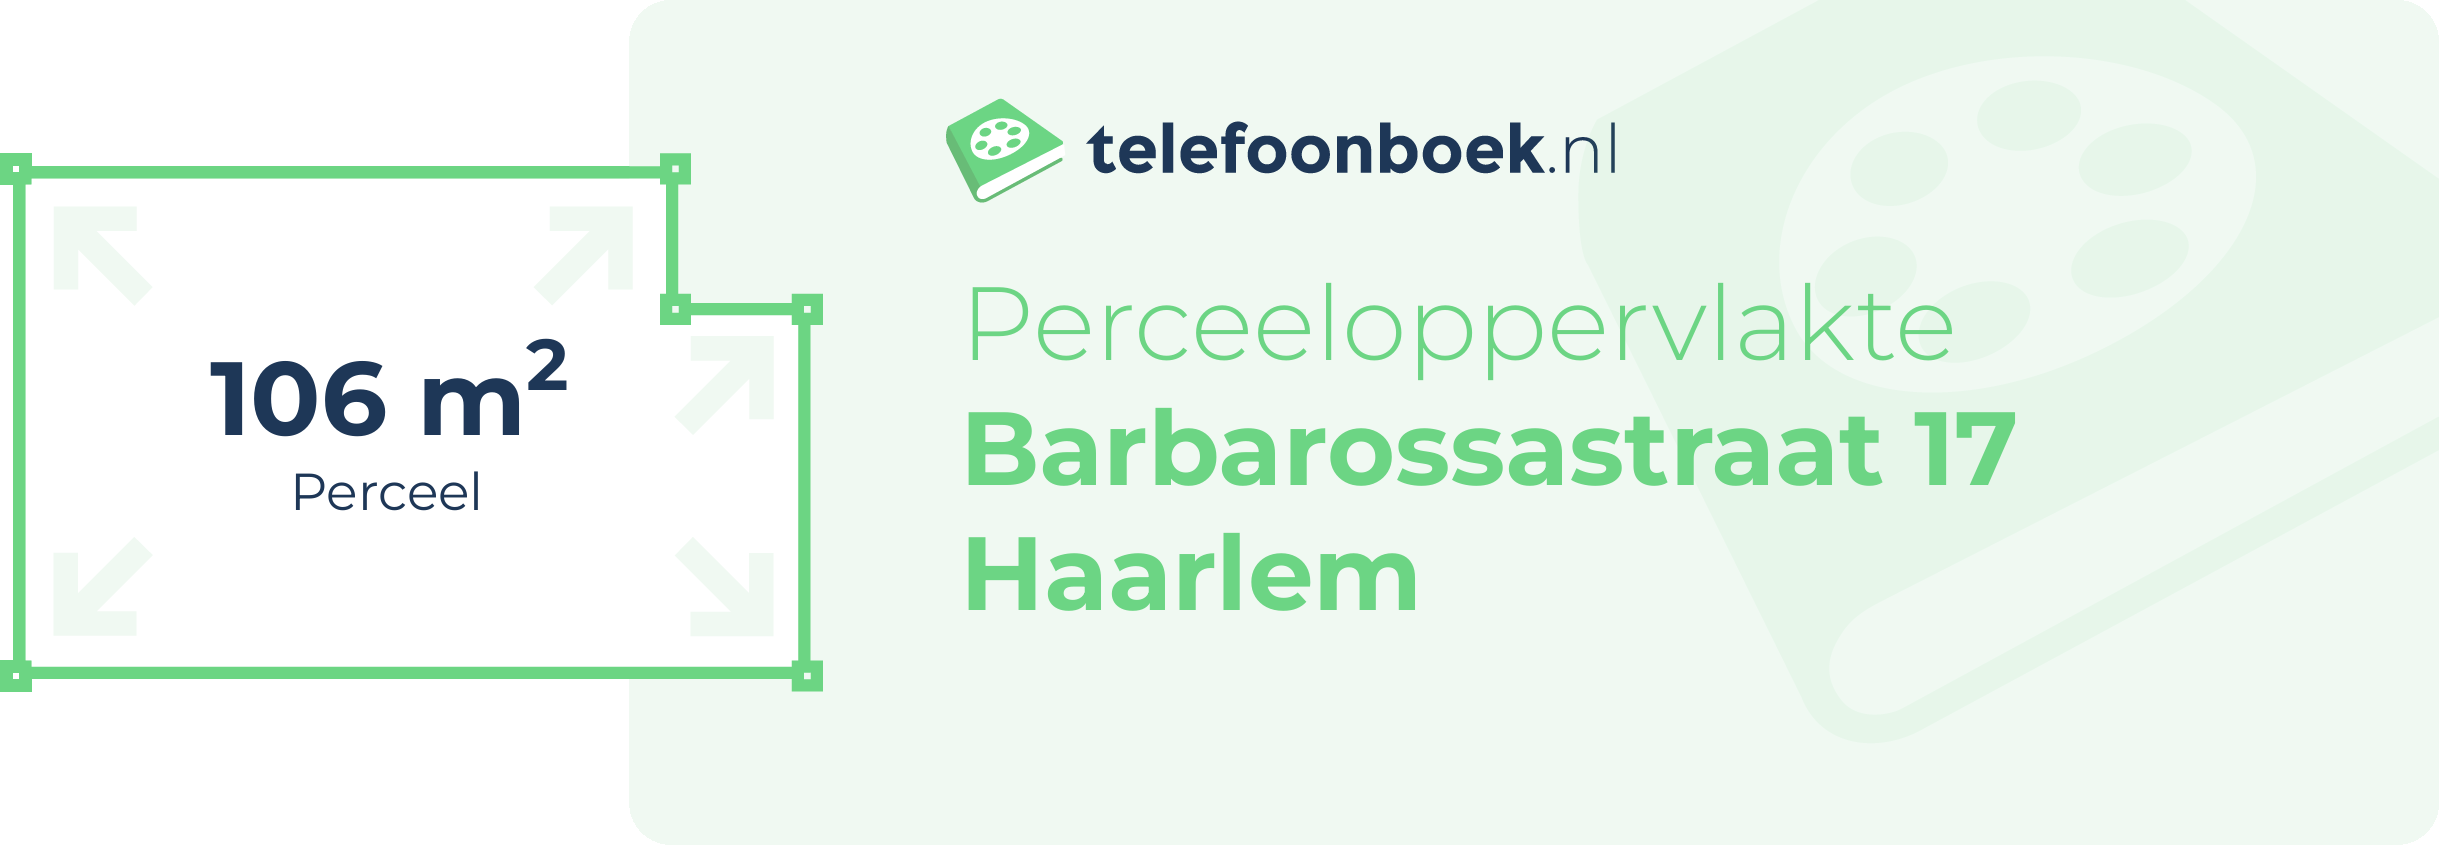 Perceeloppervlakte Barbarossastraat 17 Haarlem